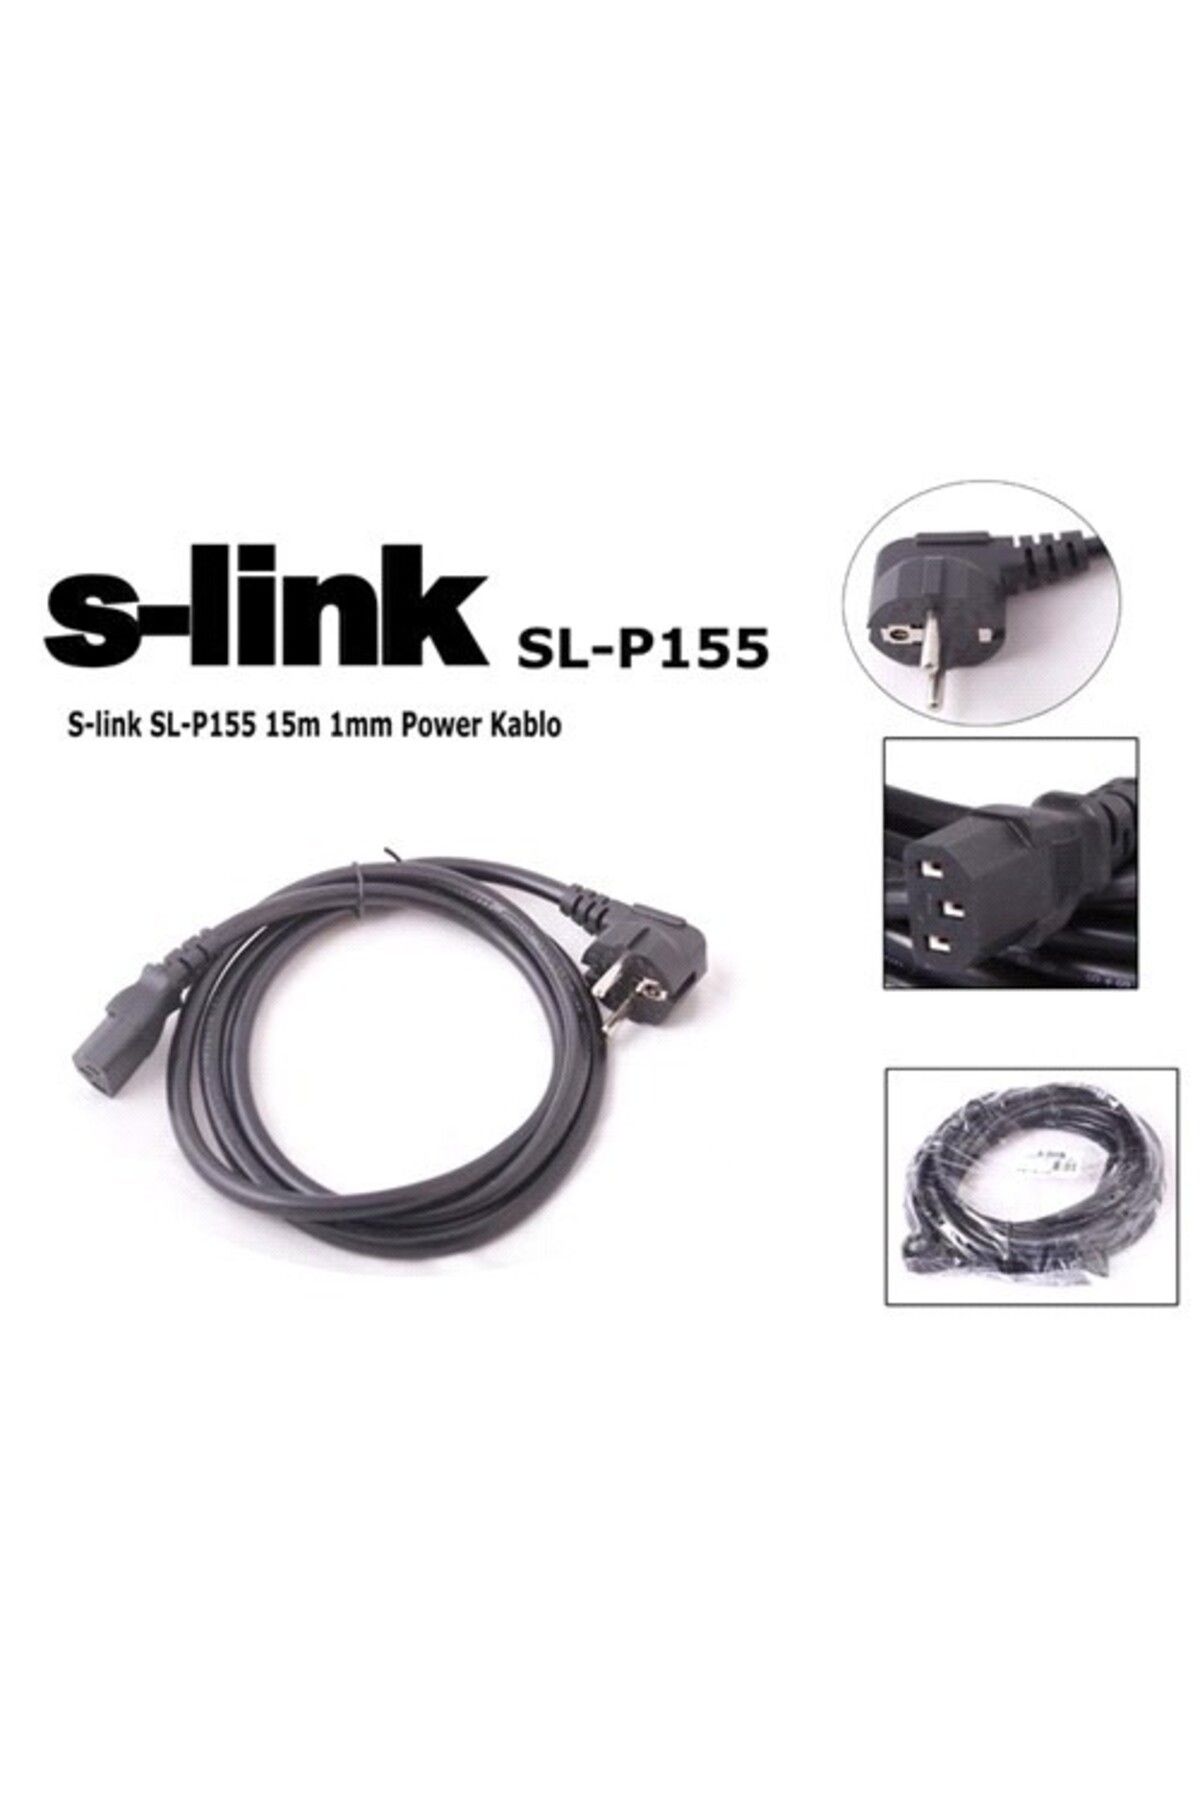 KEEPRO S-link Sl-p155 15m 1mm Power Kablo